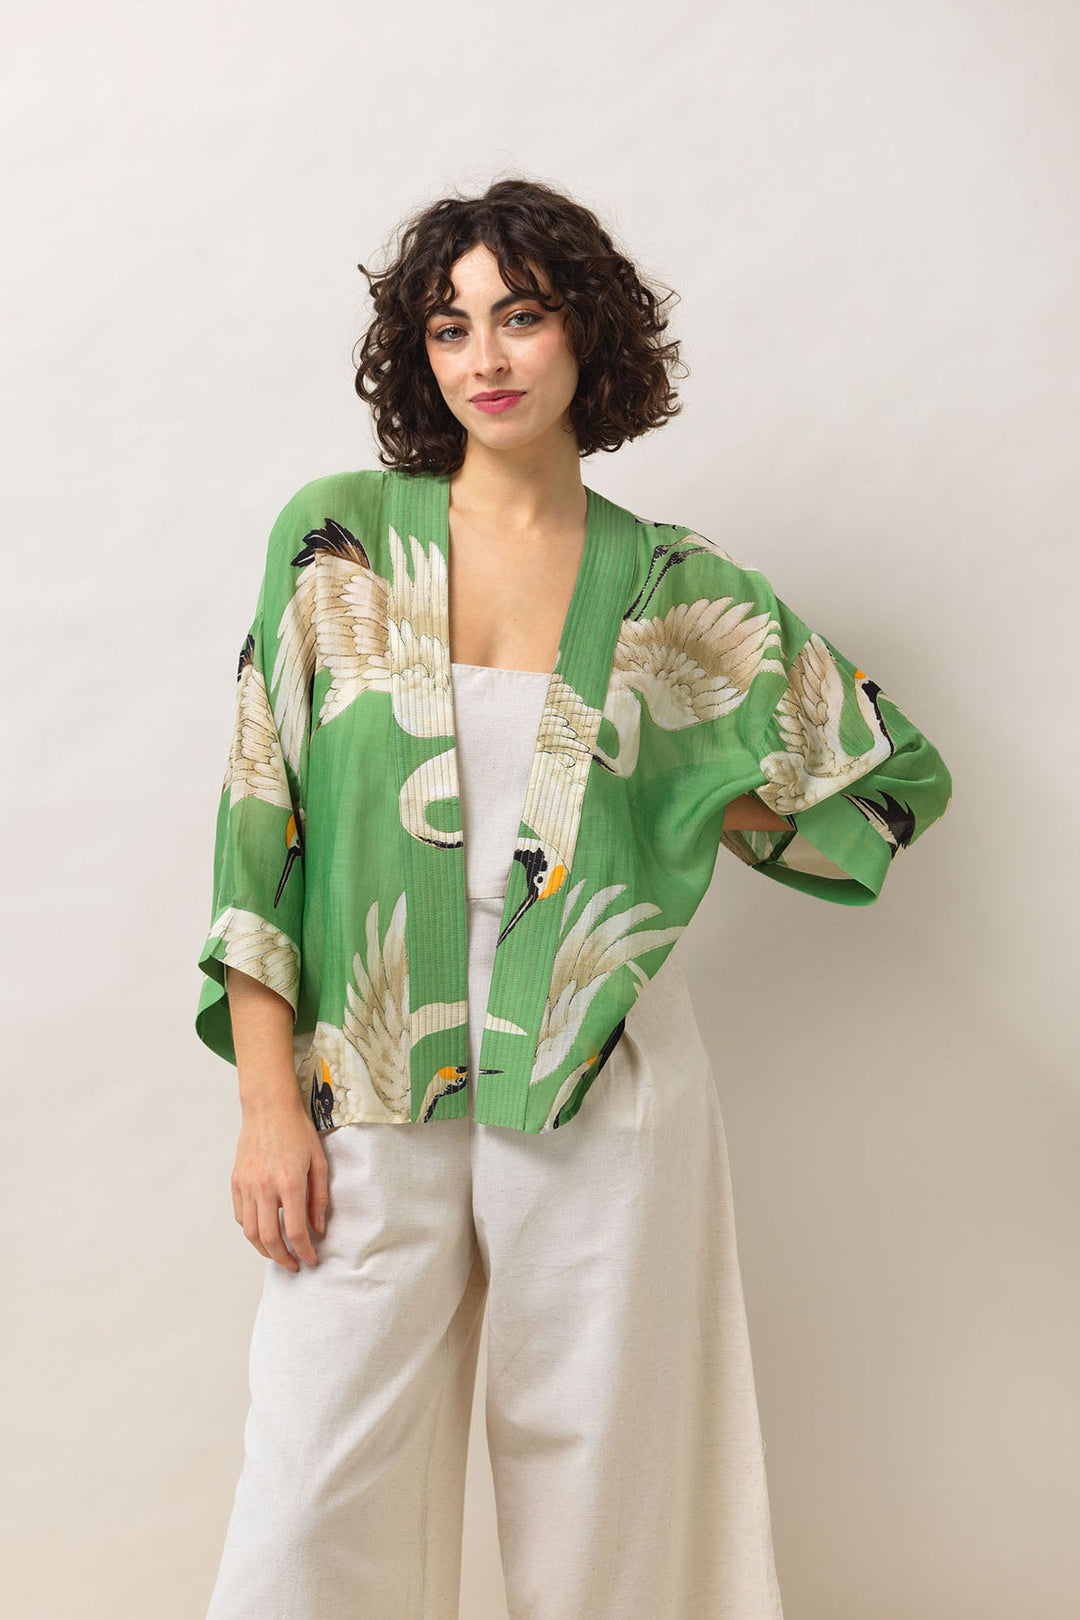 Women's short kimono in pea green and white stork print by One Hundred Stars